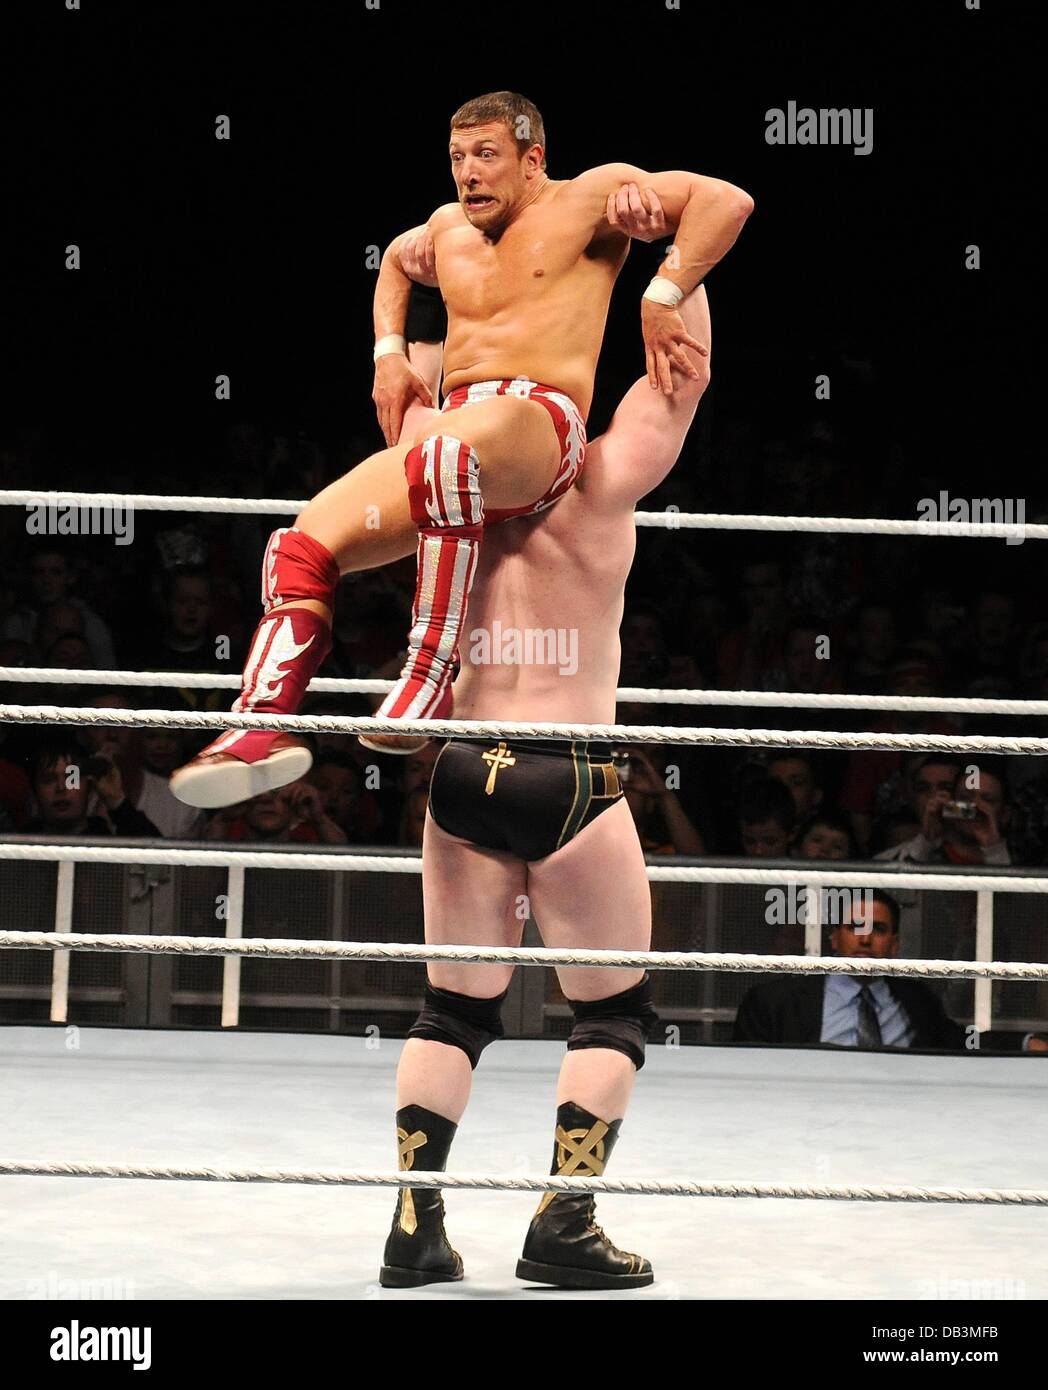 Sheamus and Daniel Bryan WWE RAW Wrestling Superstars at The O2 Arena Dublin, Ireland - 15.04.11 Stock Photo